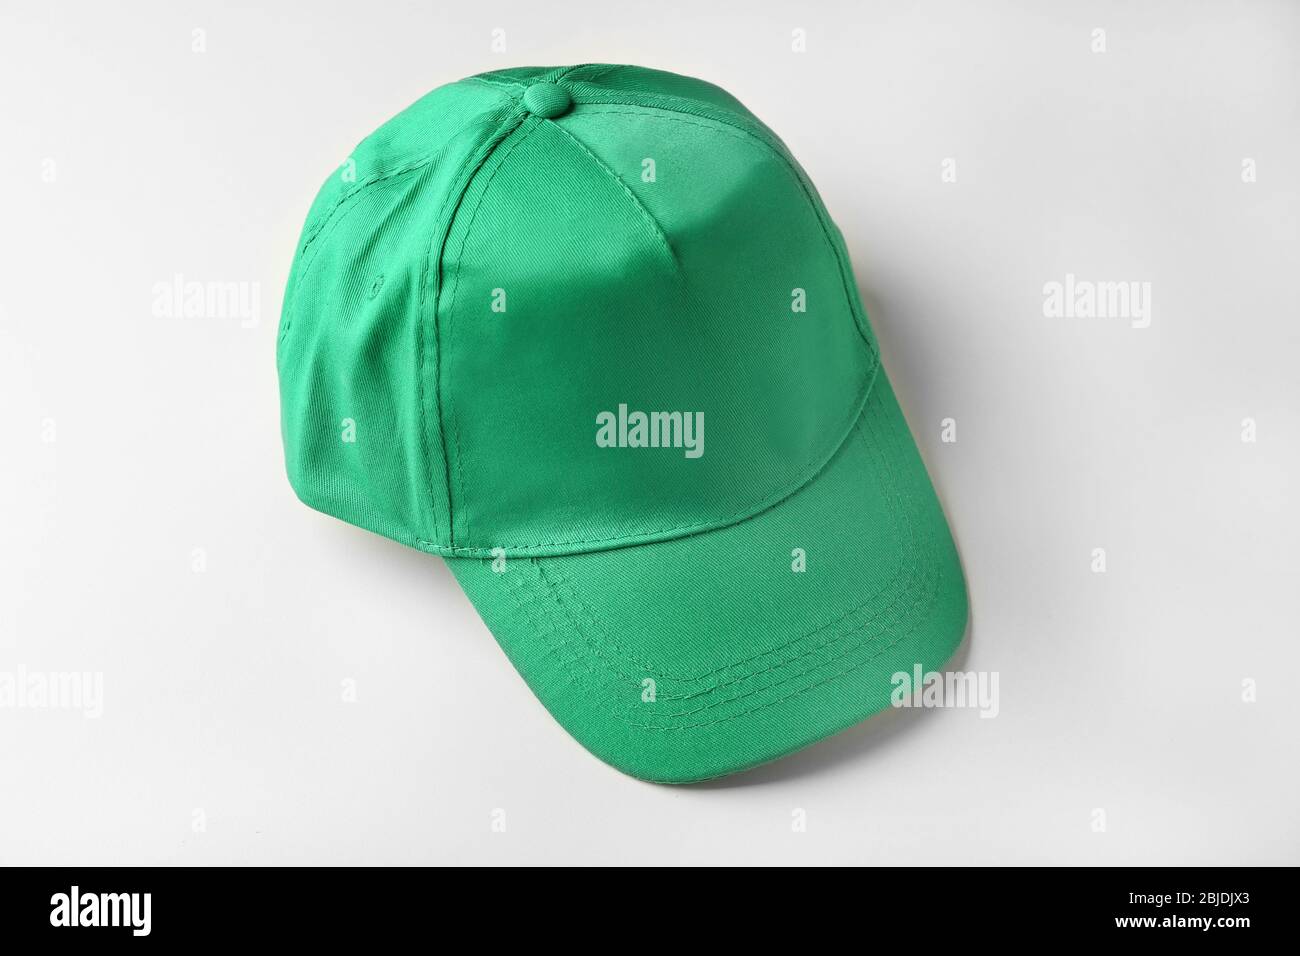 Blank green baseball cap on white background Stock Photo - Alamy